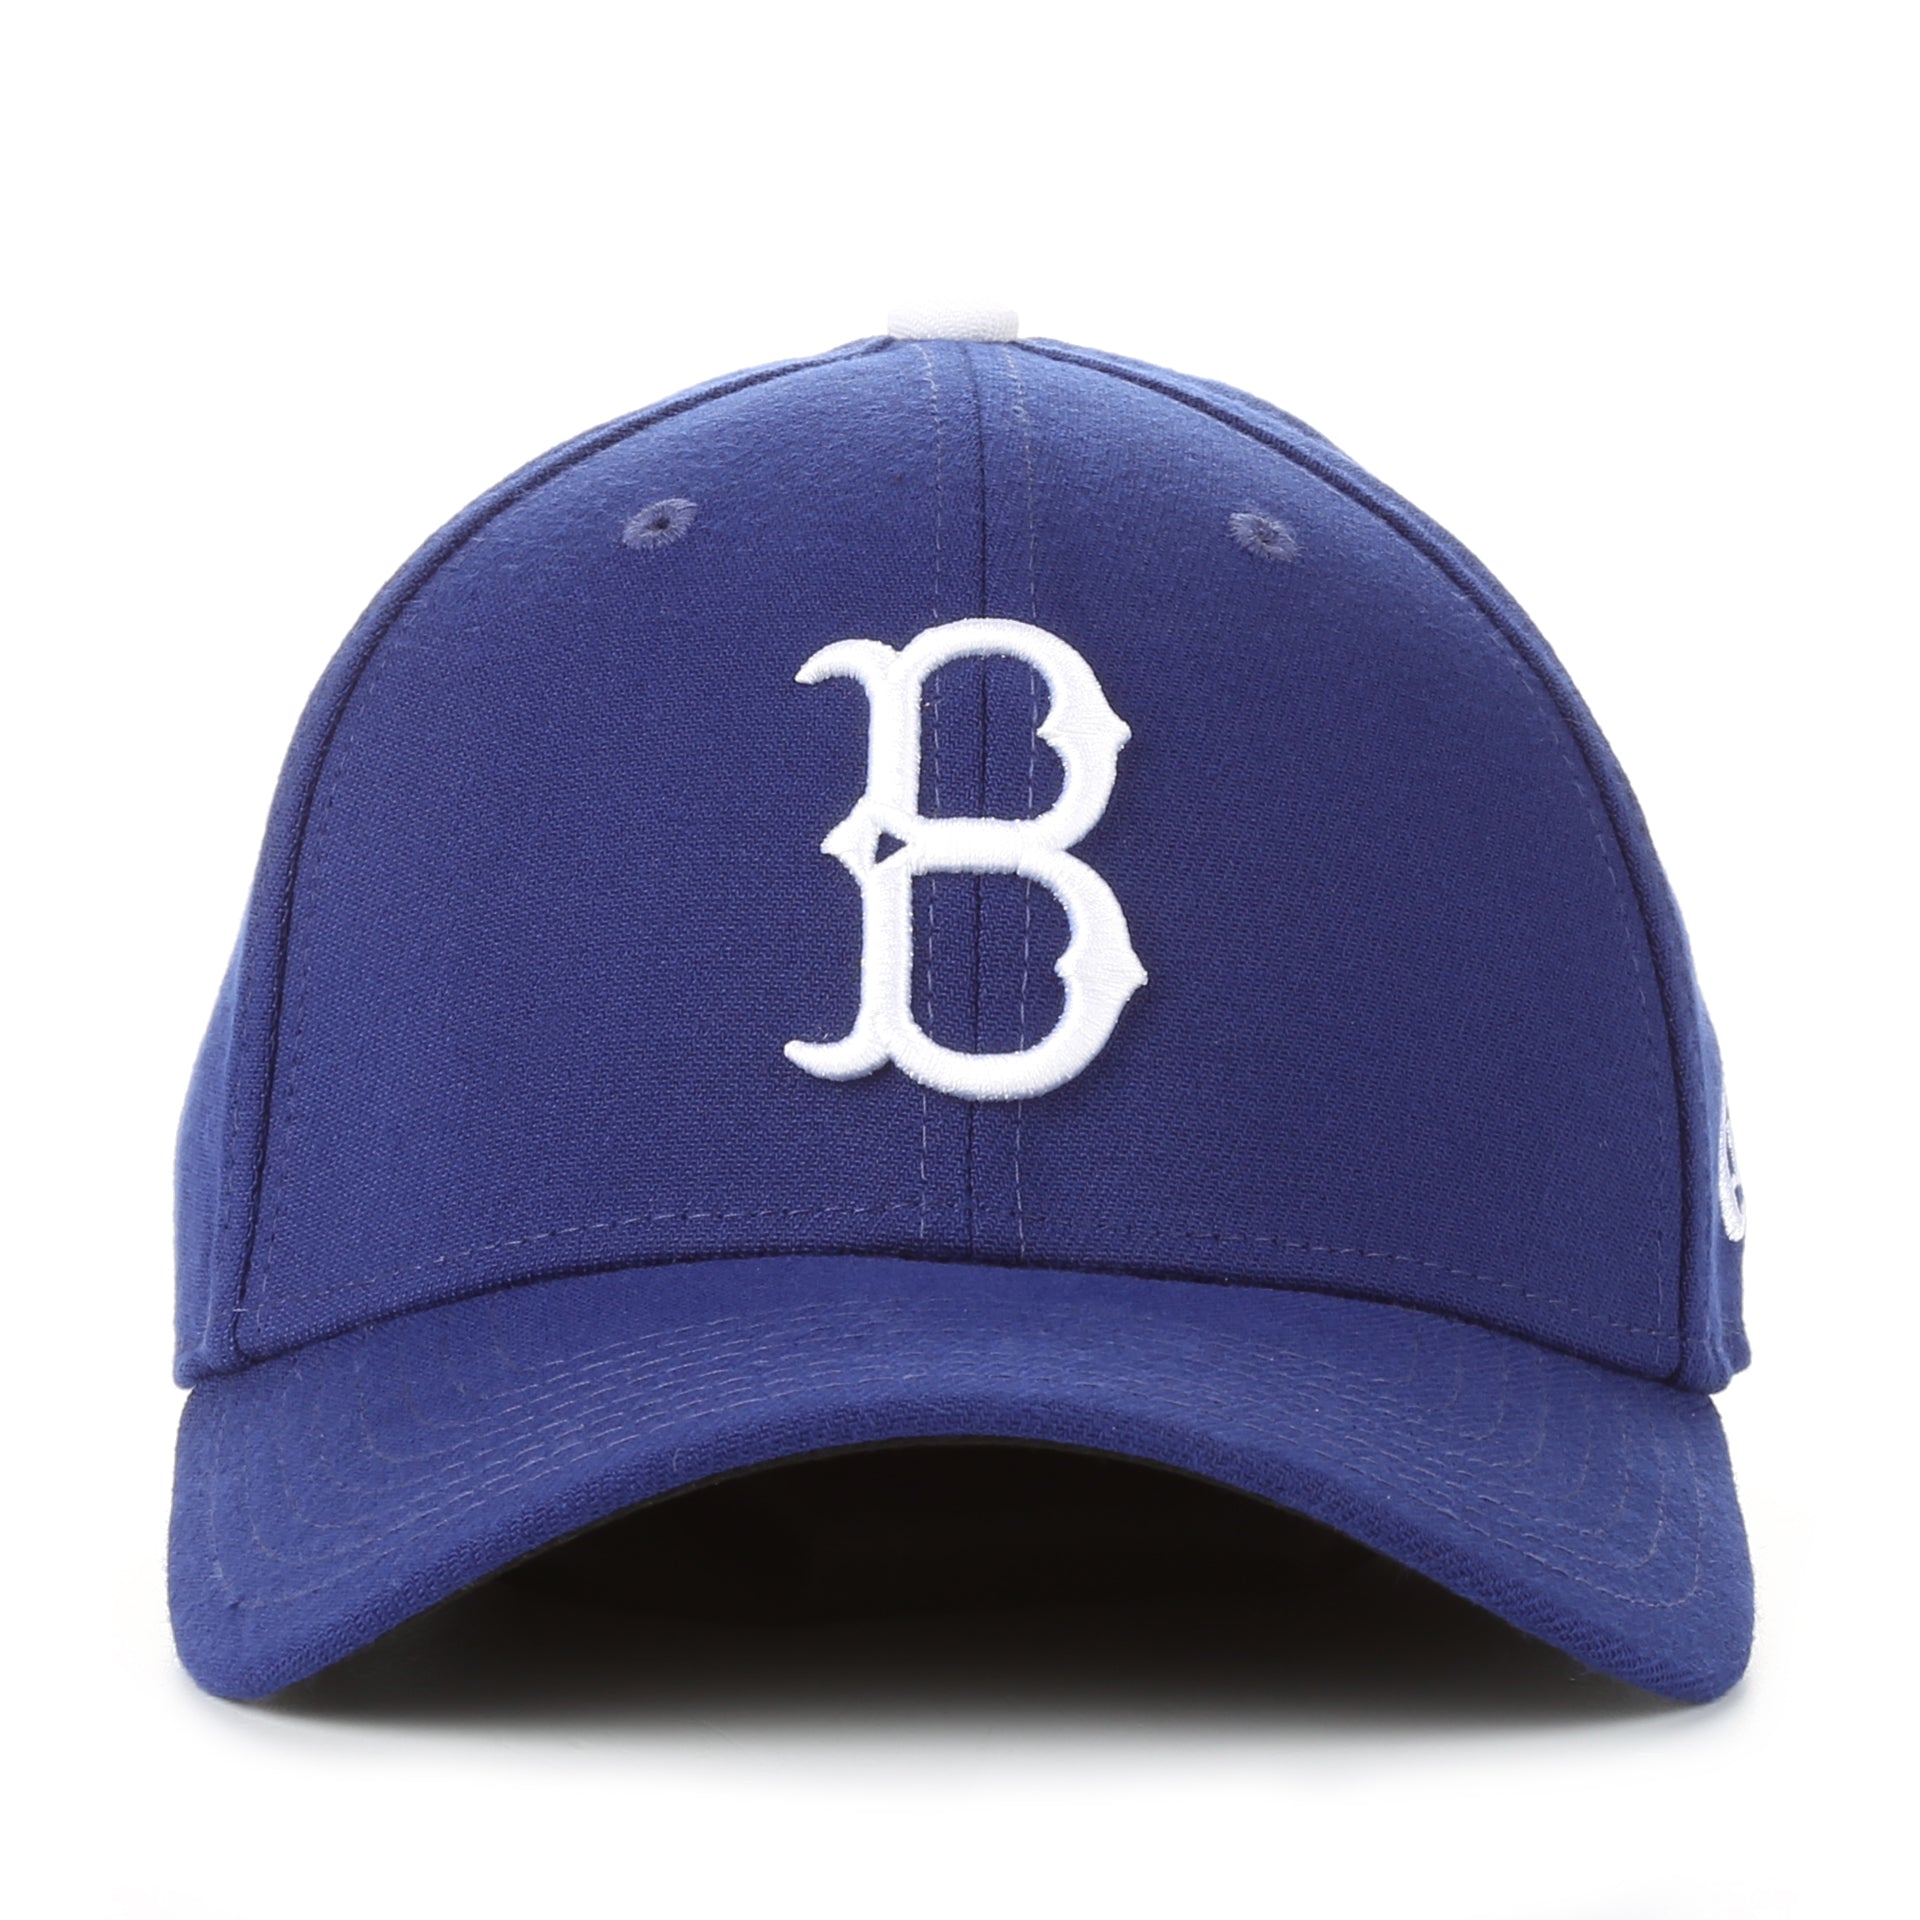 New Era 39Thirty Team Classic Stretch Fit Cap - Brooklyn Dodgers/Blue - New  Star